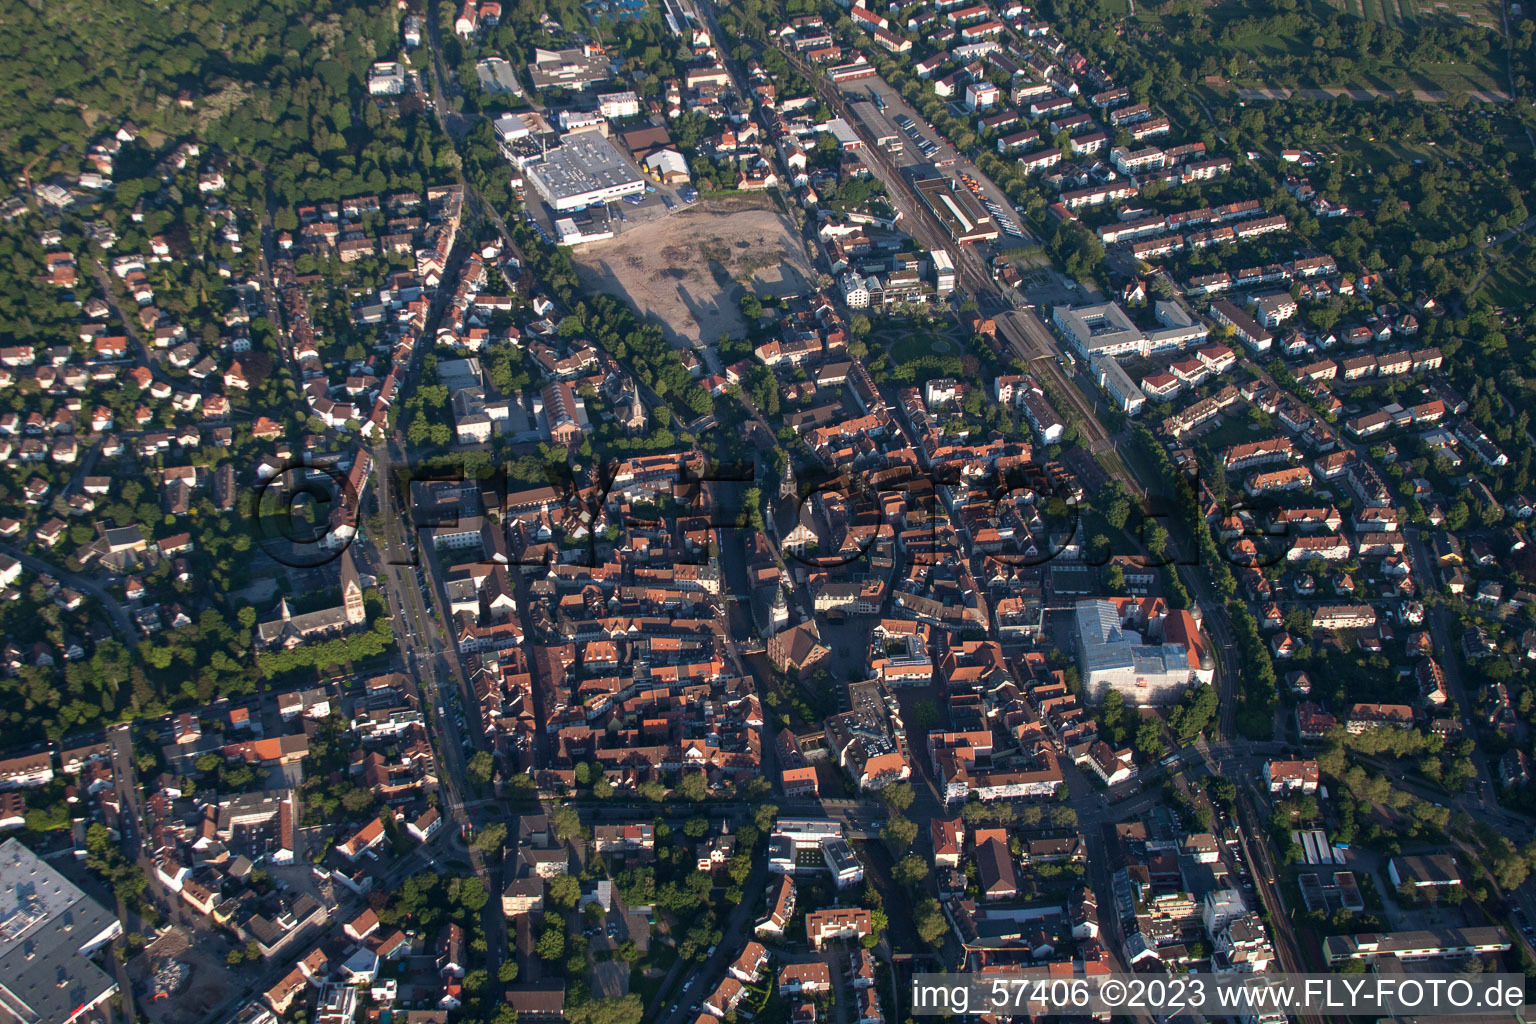 Drone recording of Ettlingen in the state Baden-Wuerttemberg, Germany